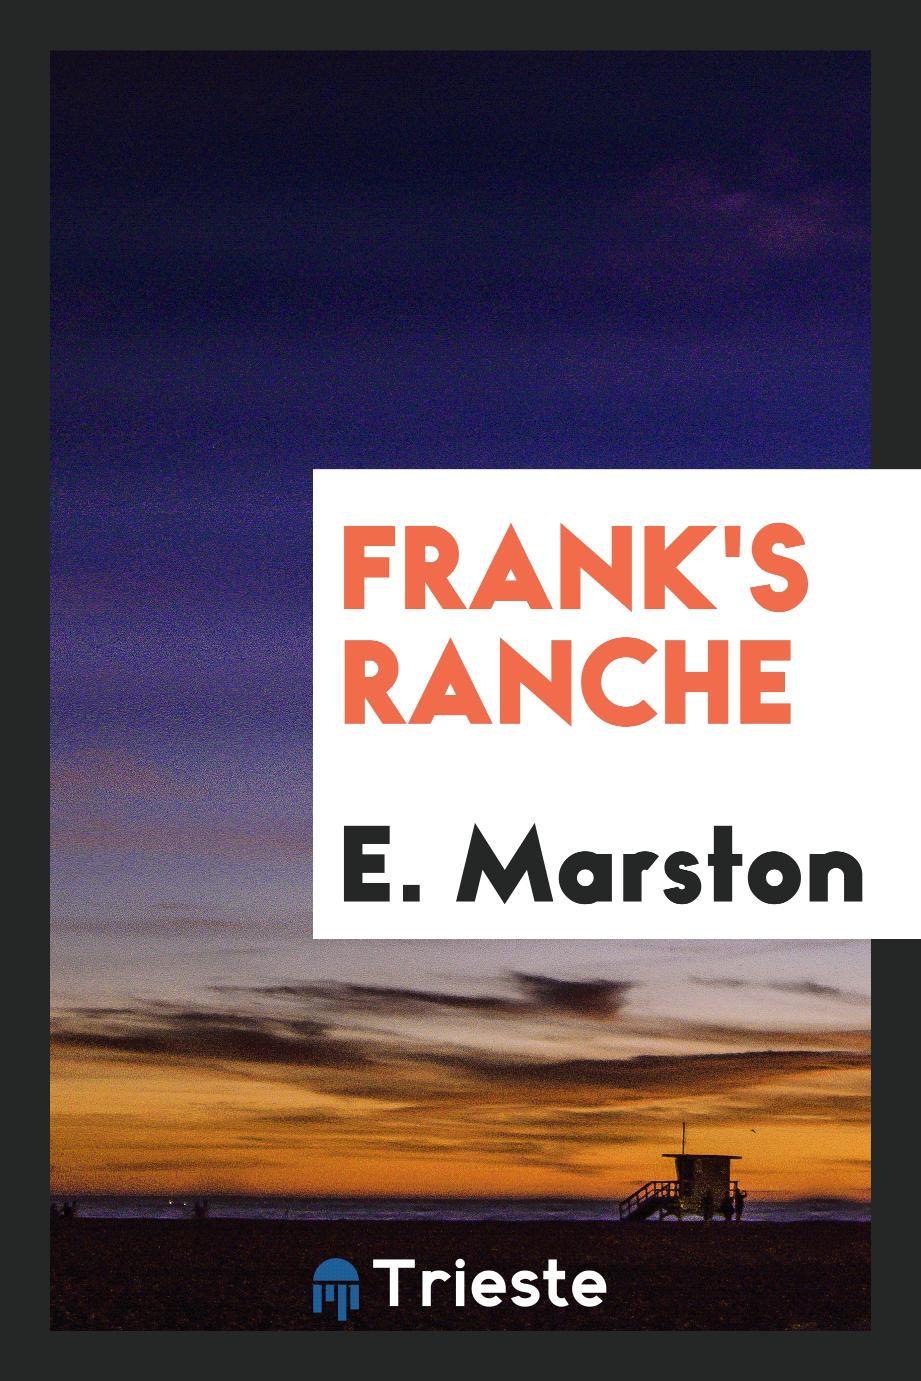 Frank's ranche